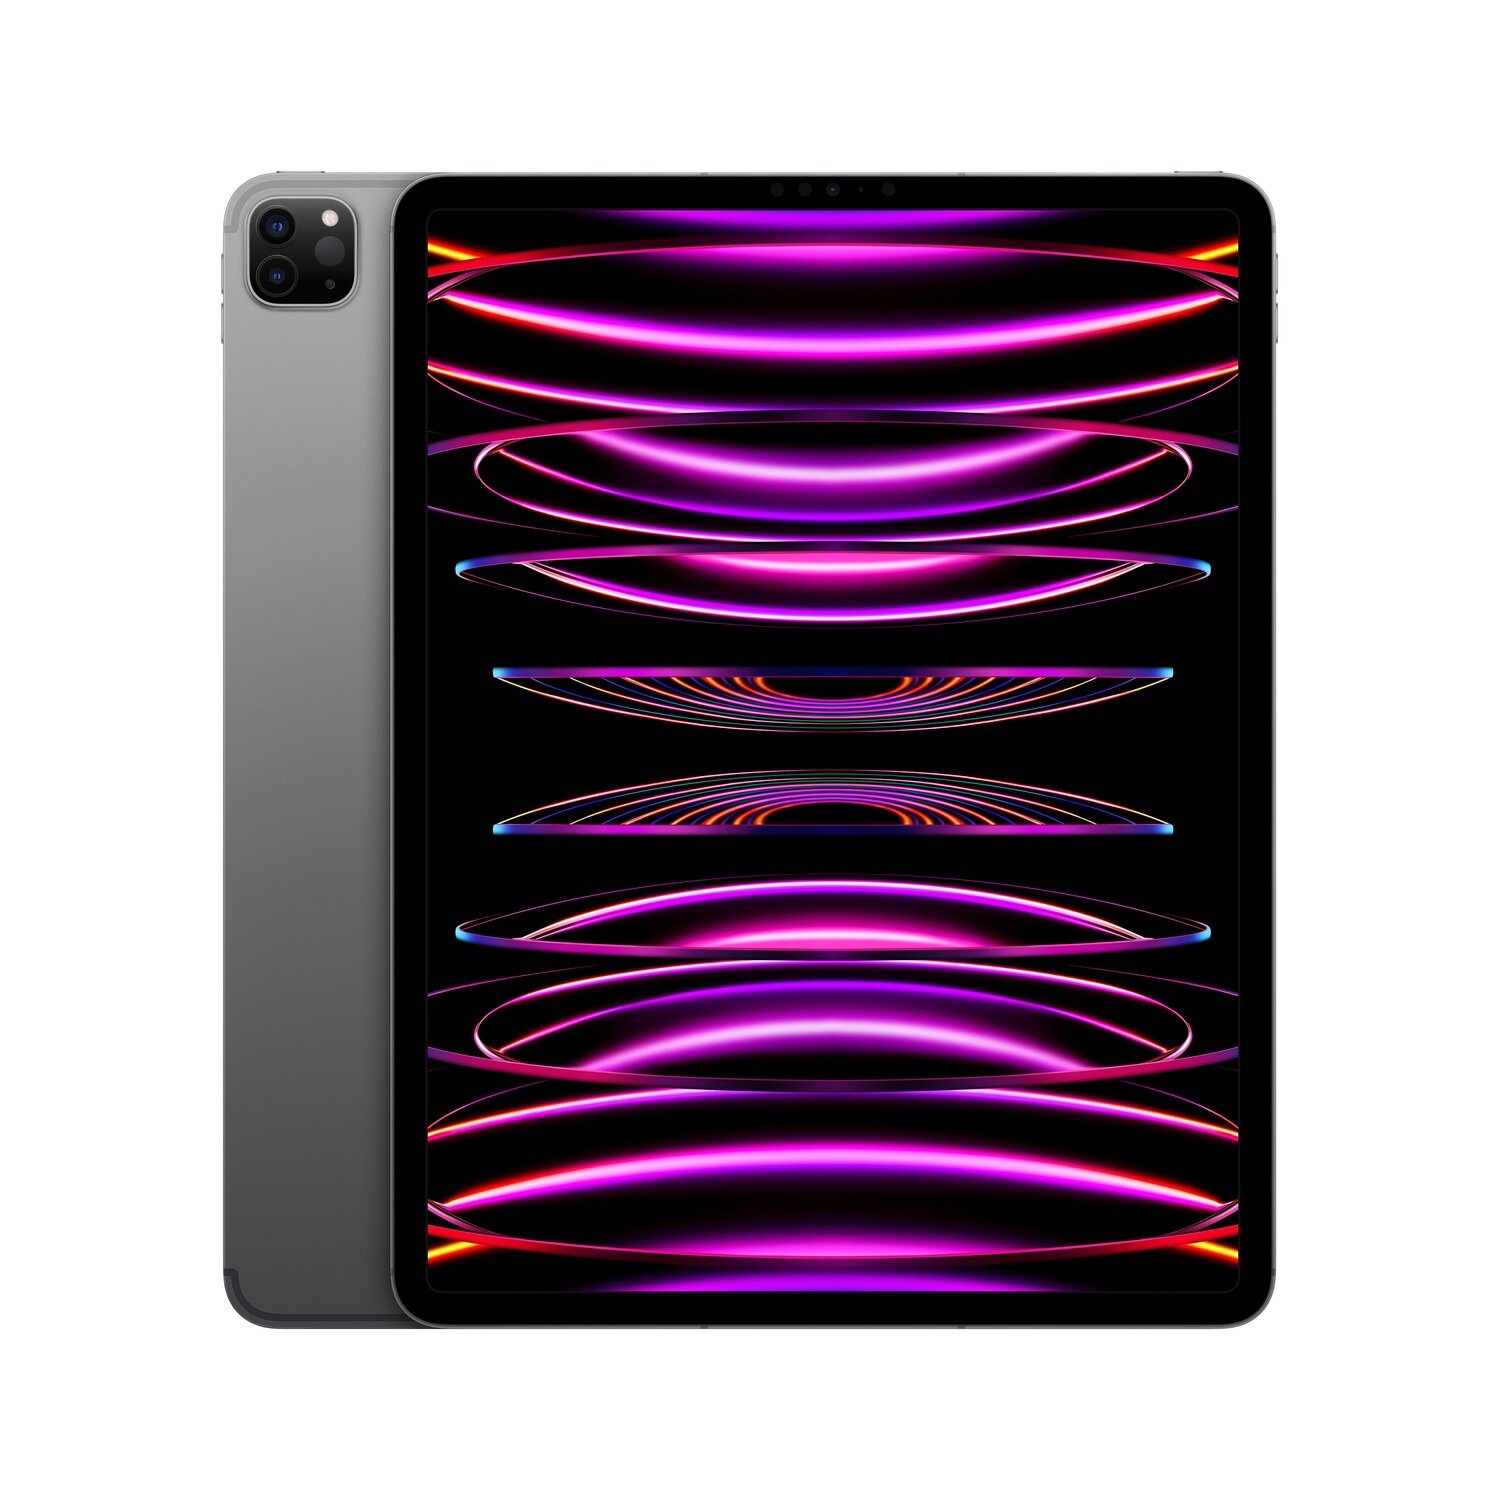 Apple 12.9 inç iPad Pro Wi-Fi + Cellular 256GB - Uzay Grisi MP203TU/A